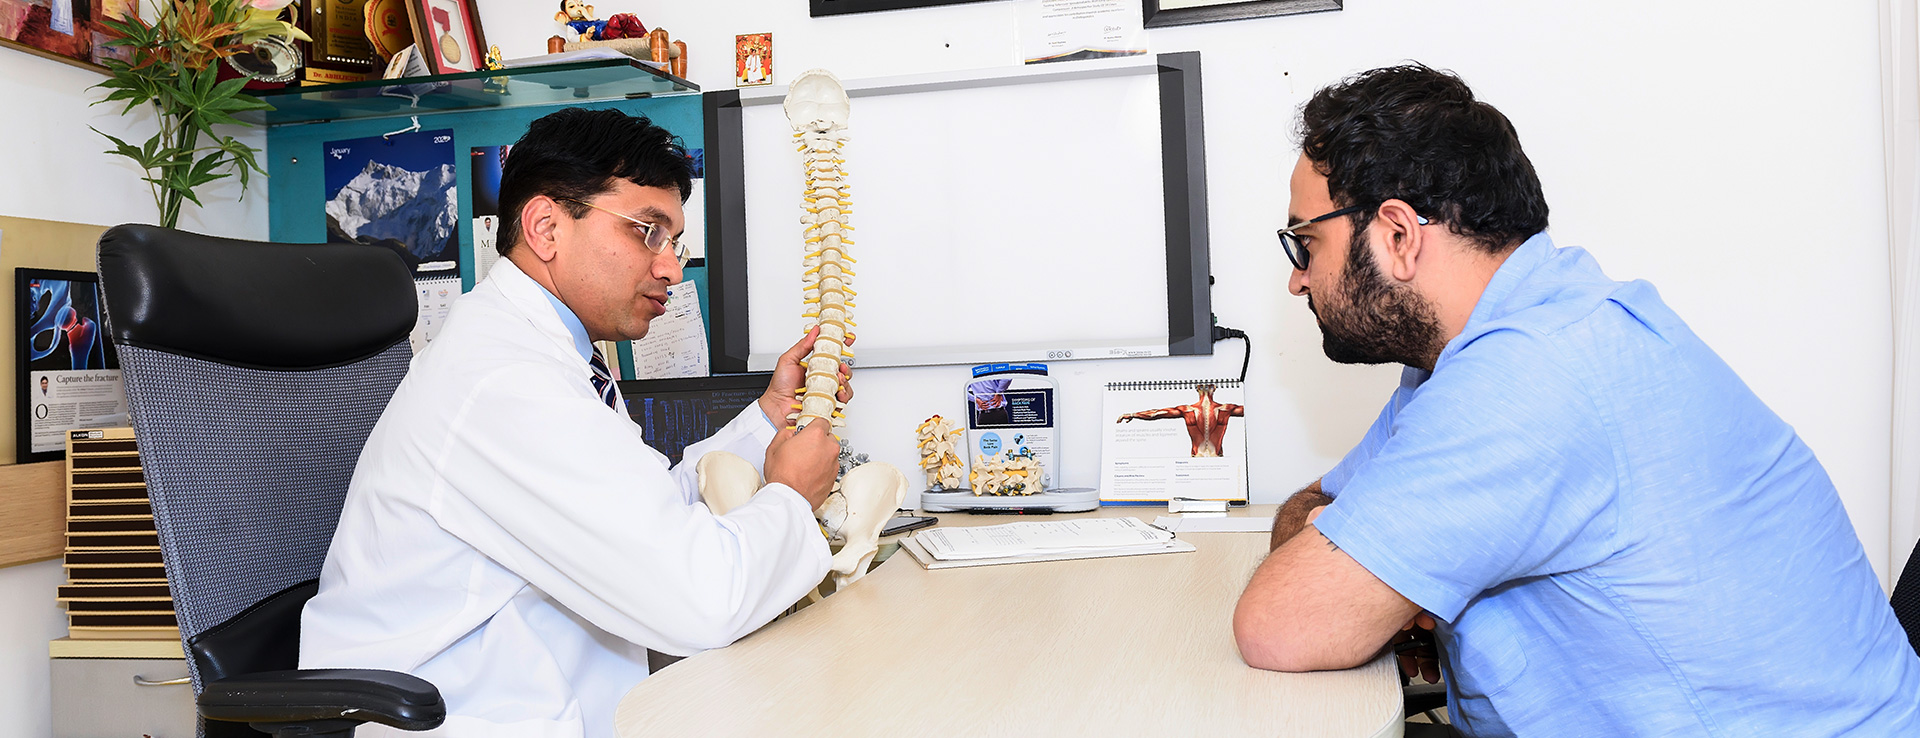 Endoscopic Spine Surgery in Mumbai, India